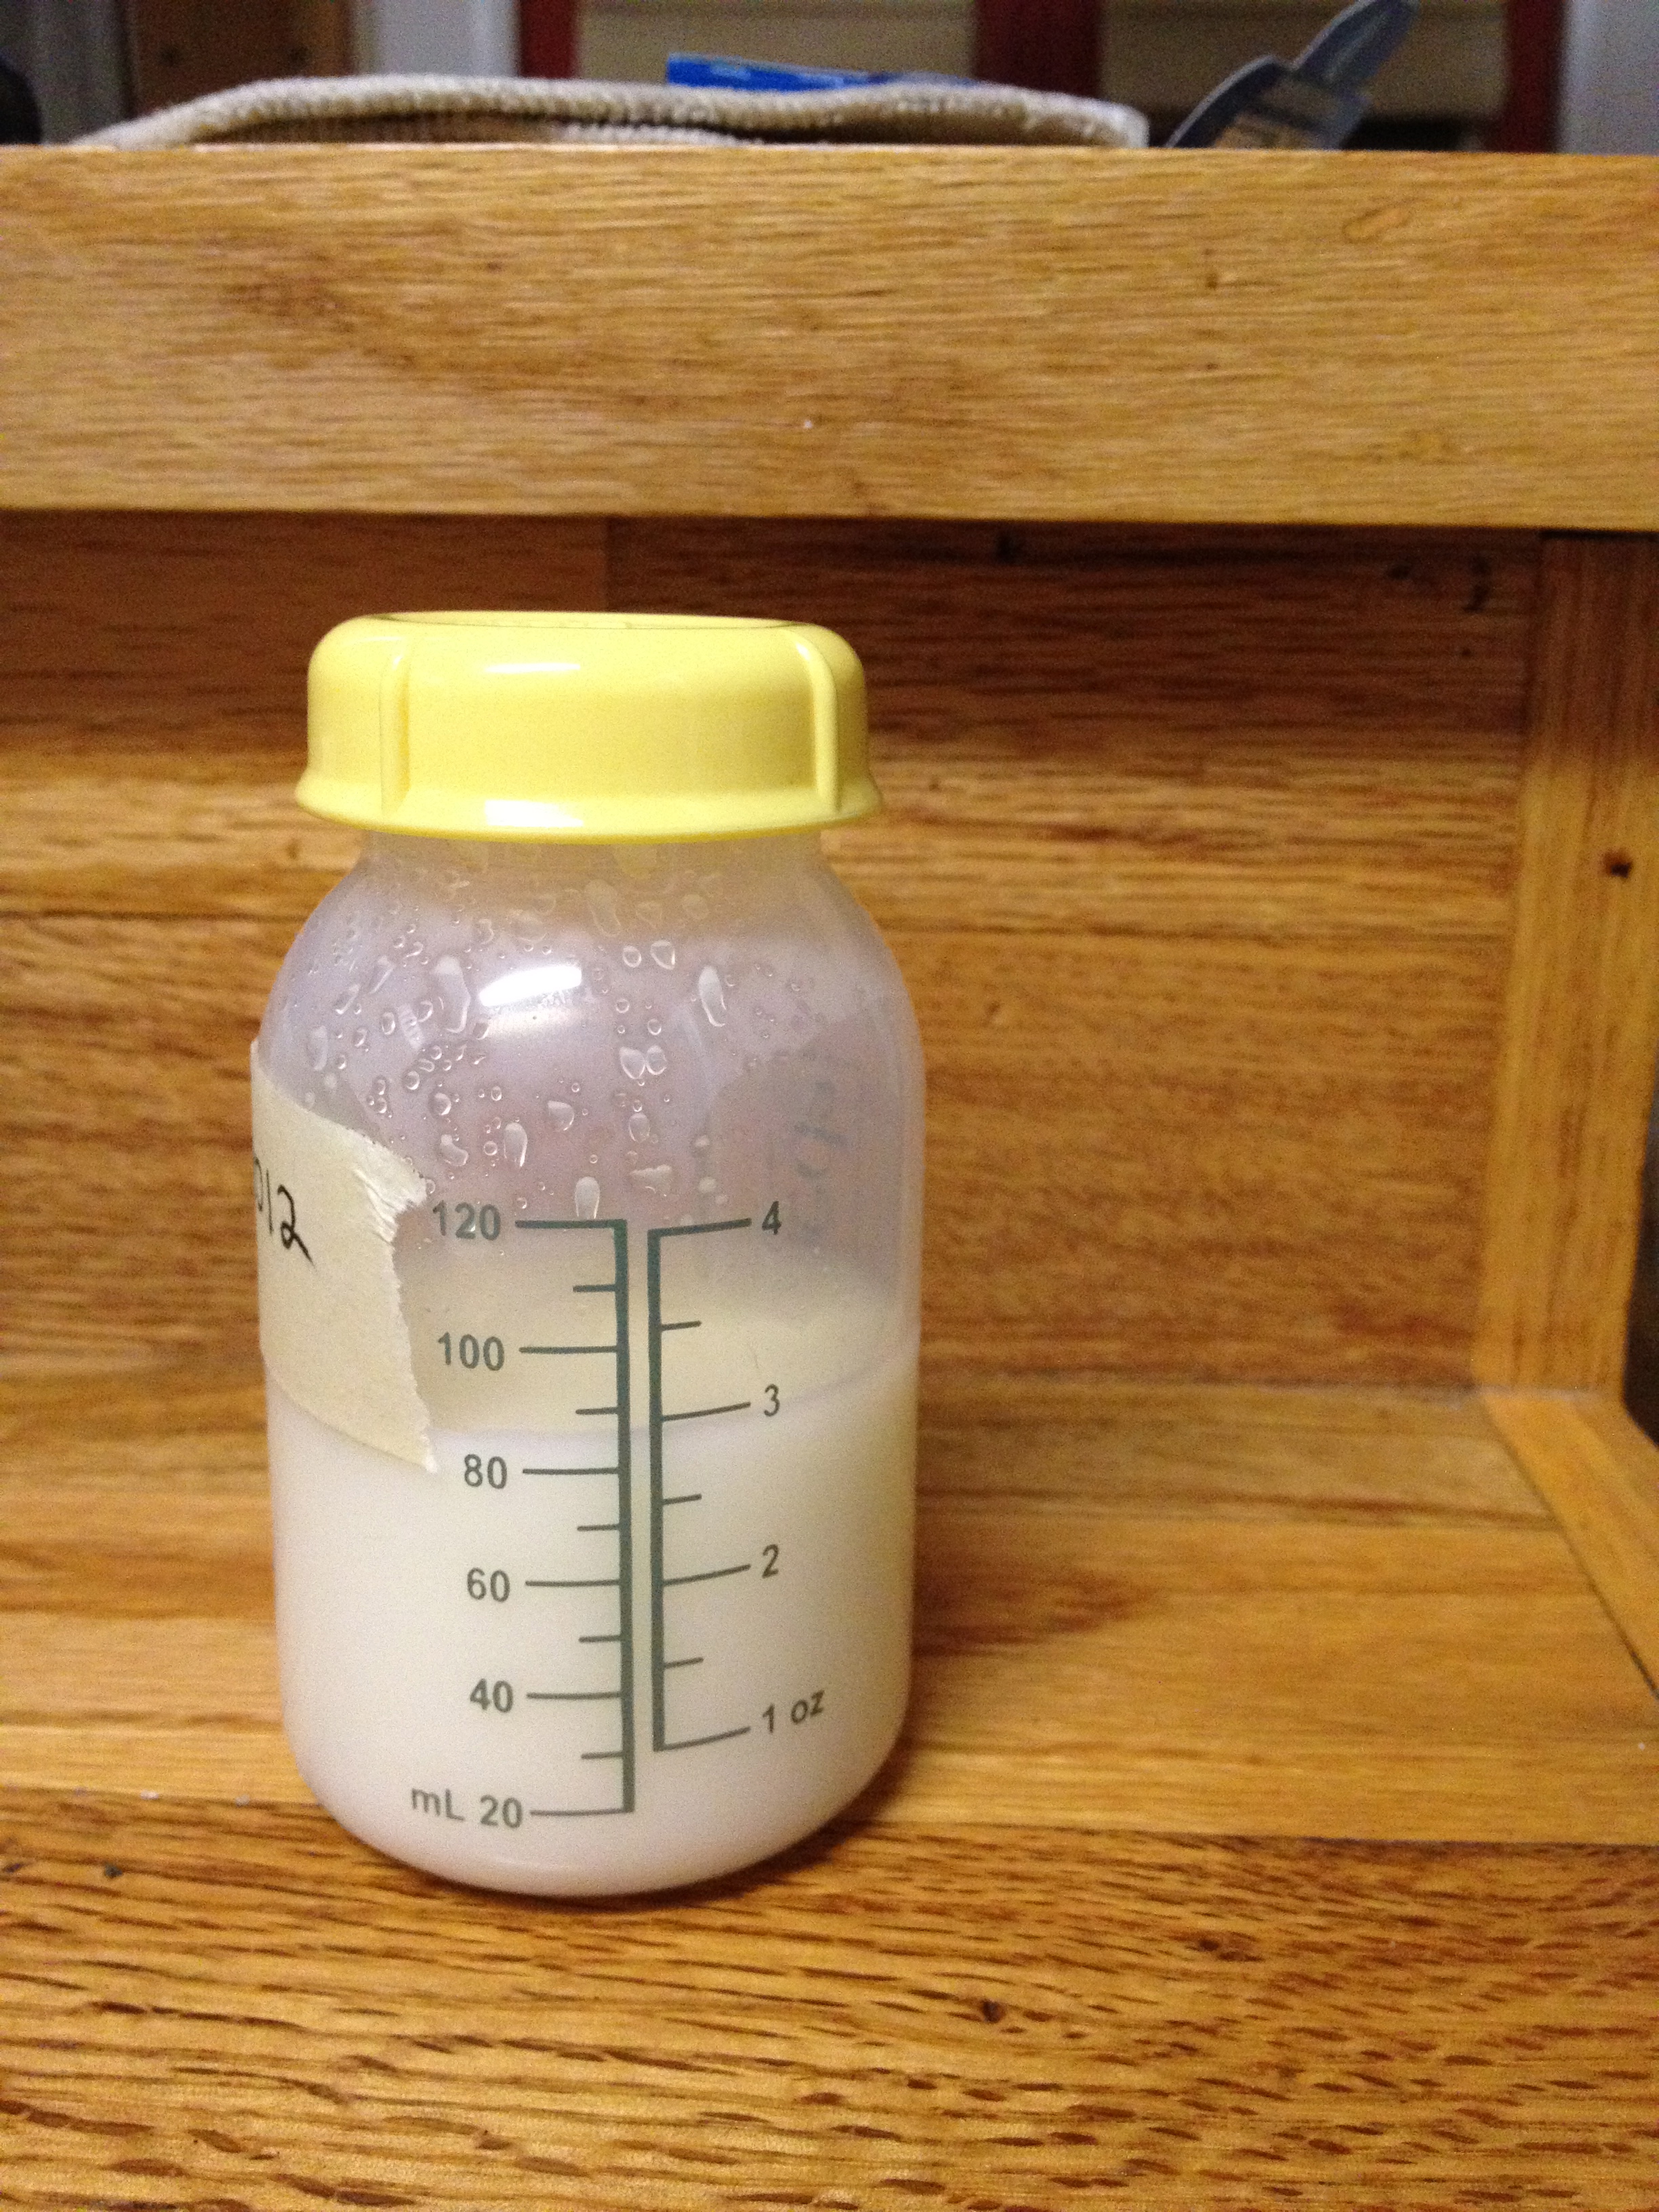 pumping breast milk